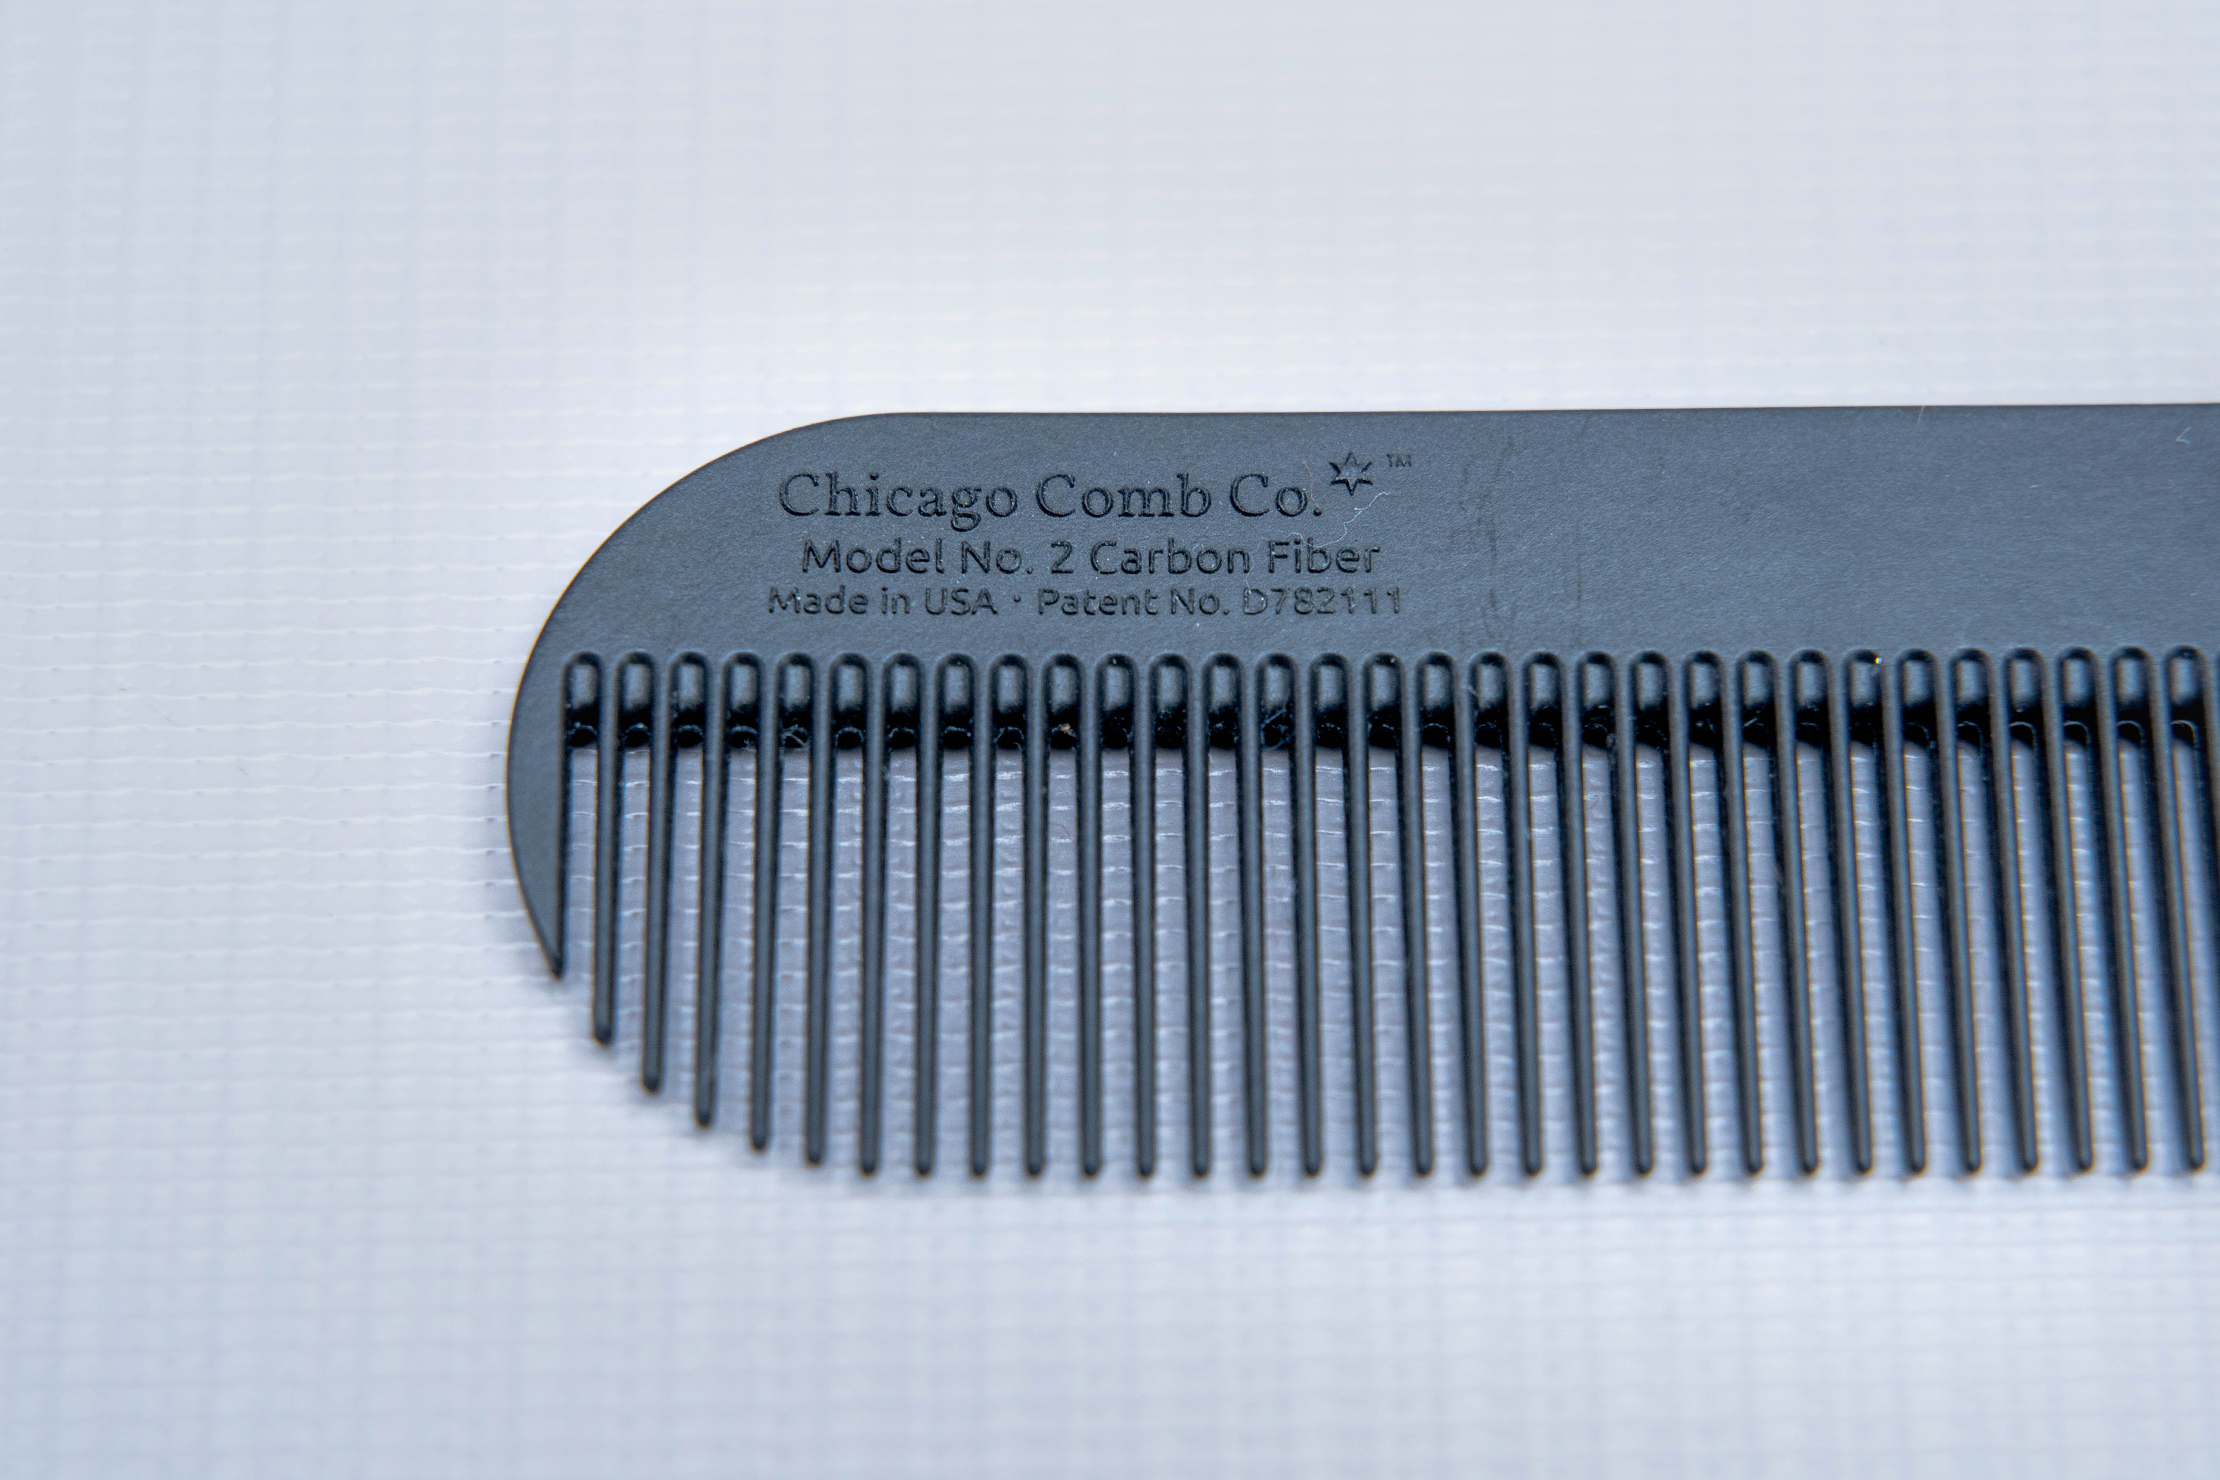 Chicago Comb Co. Model No. 2 Carbon Fiber Brand